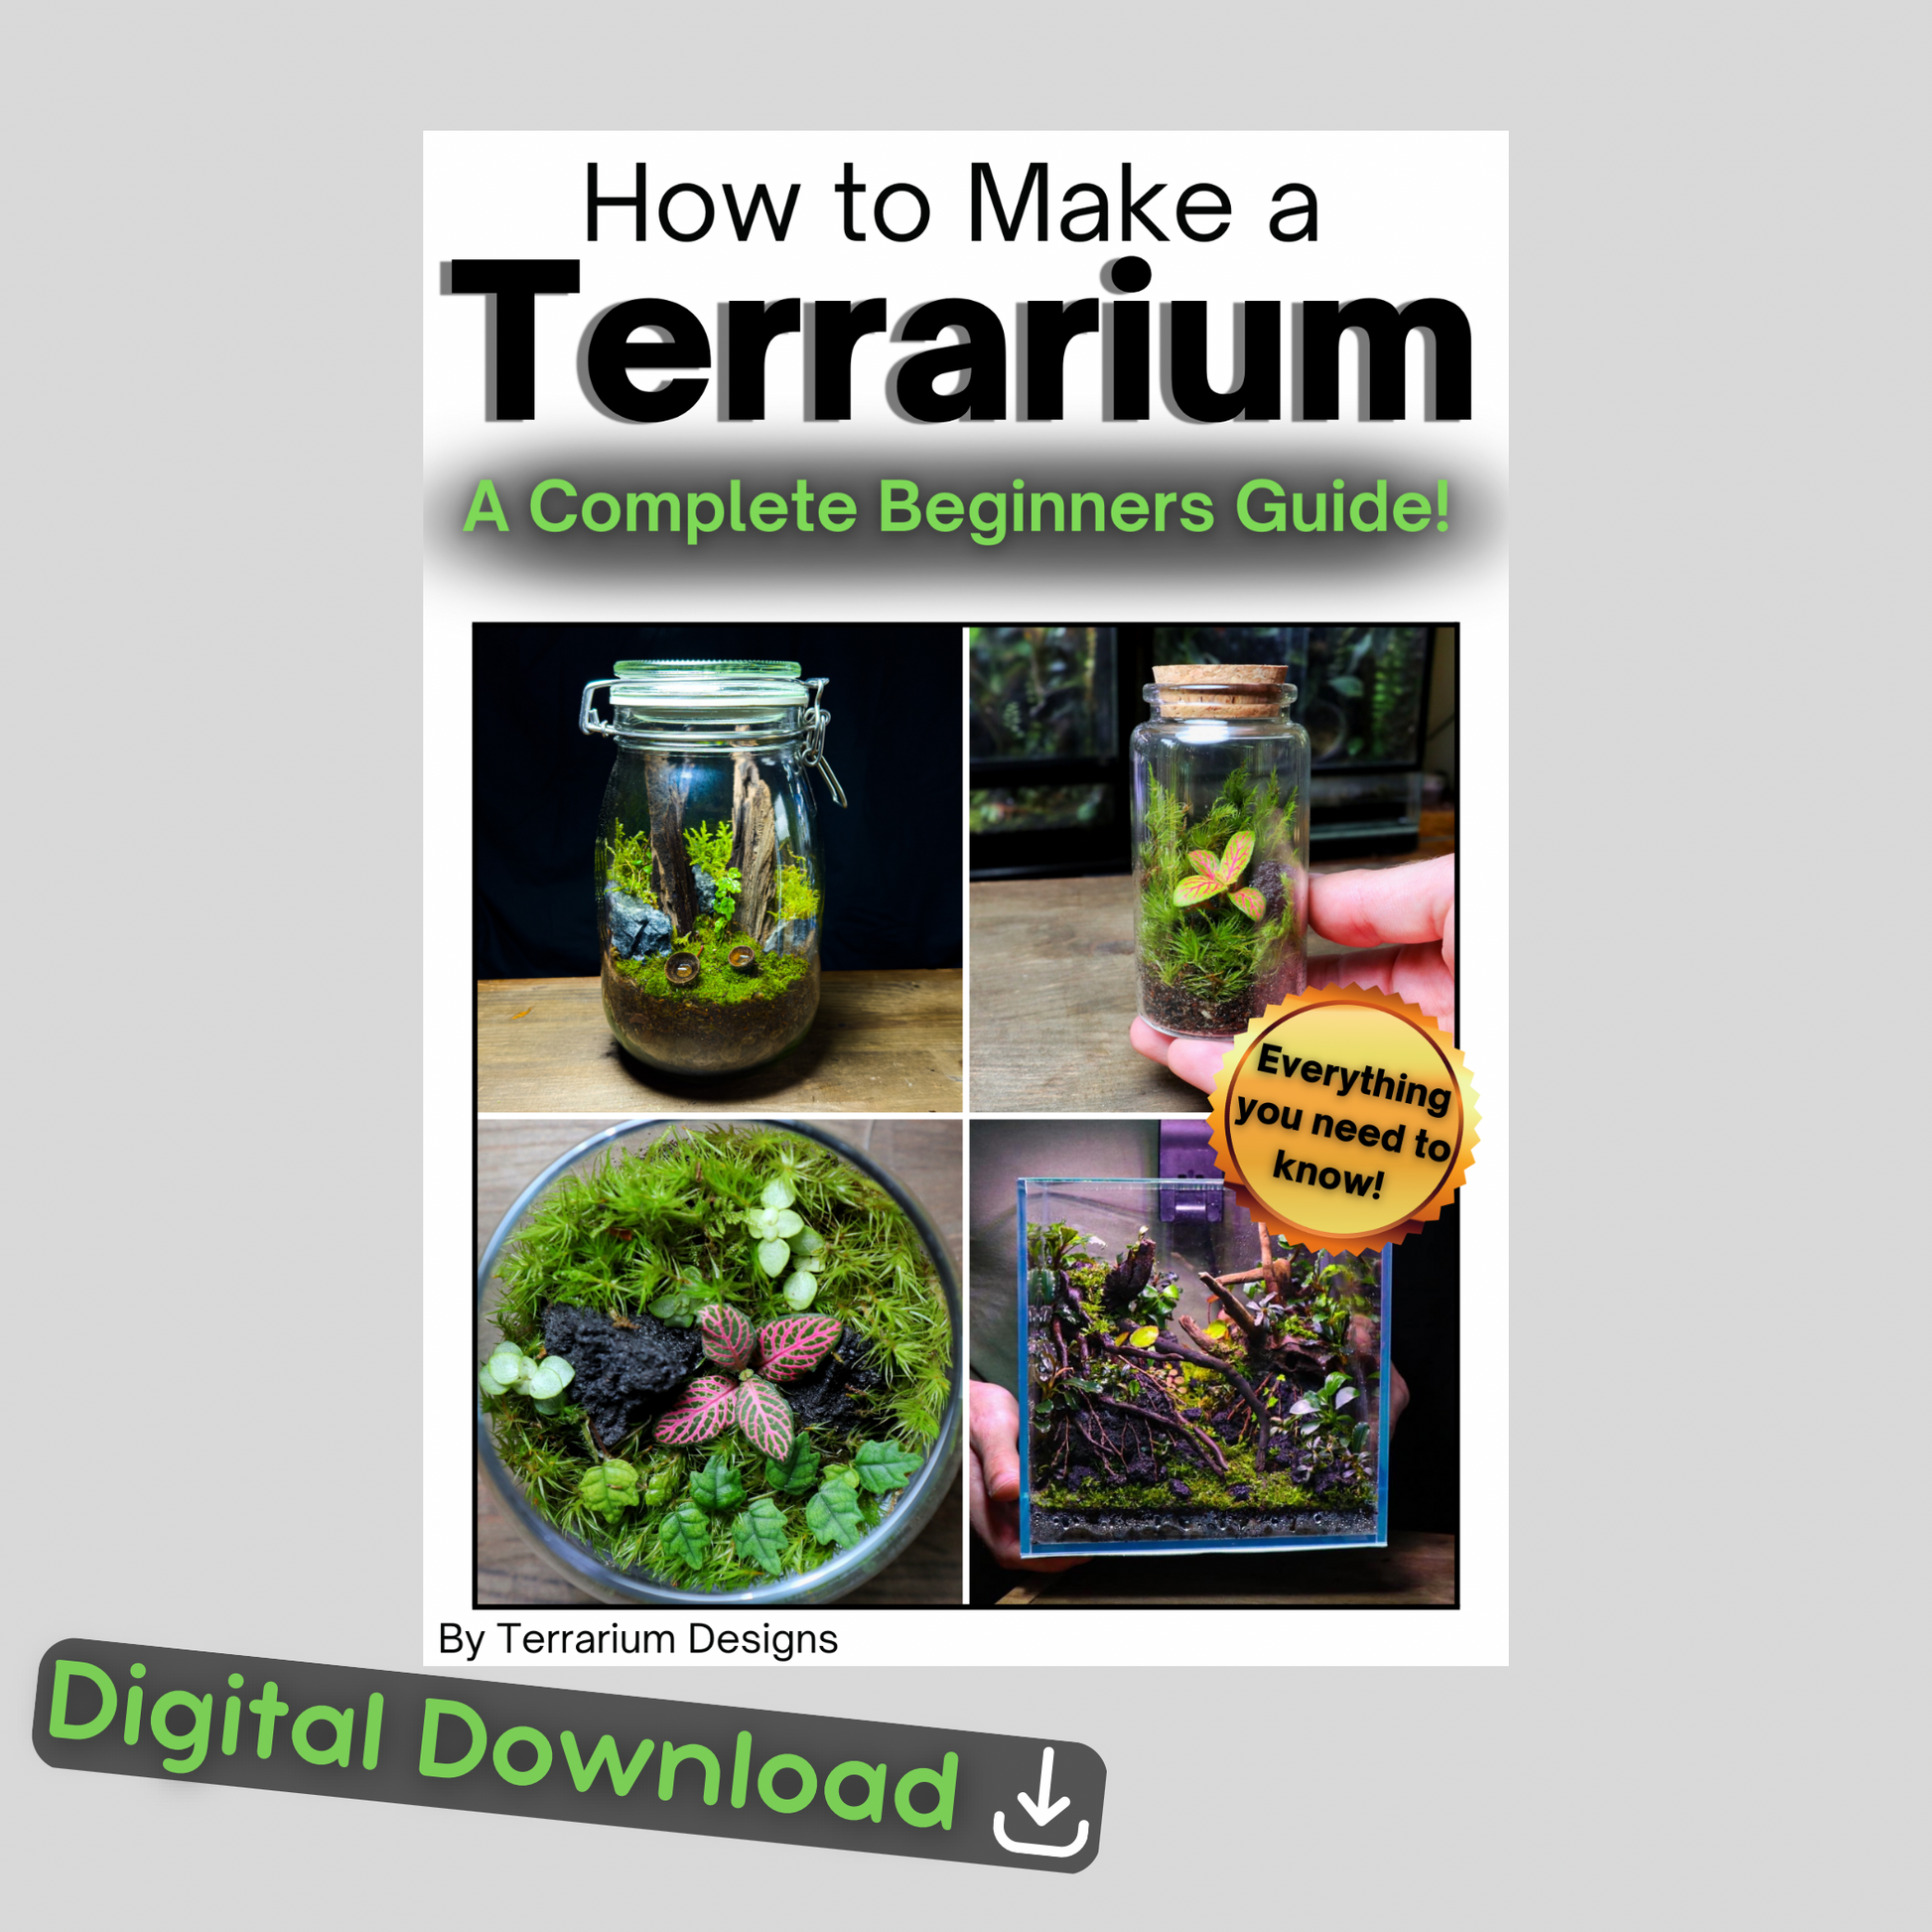 How To Make a Terrarium - A Complete Beginners Guide - Terrarium Designs